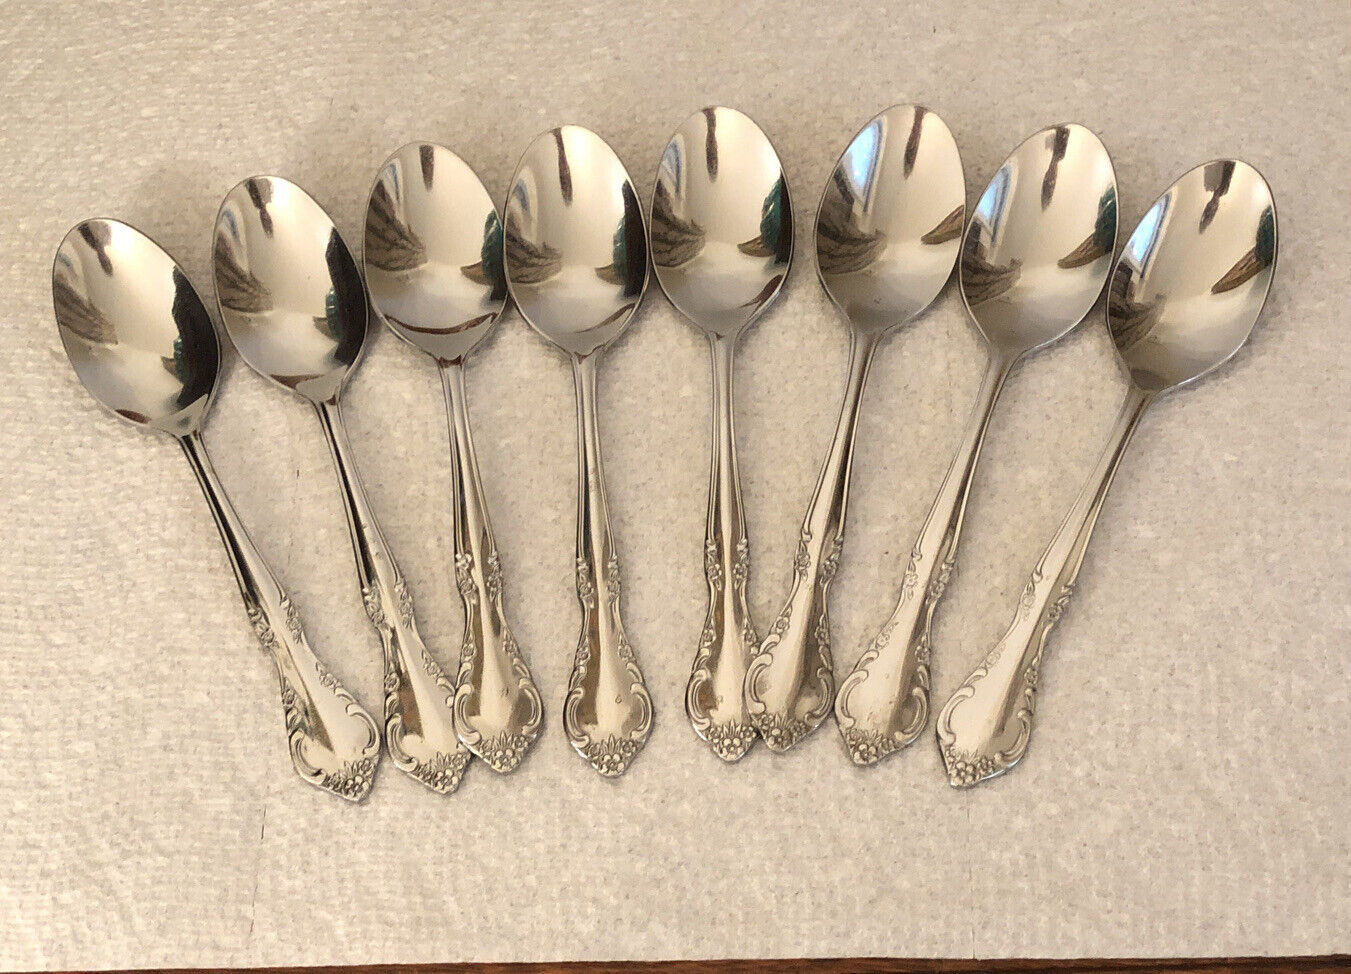 8 x Estia Teaspoon Spoons CASCADE Estia Stainless Made In Indonesia Excellent